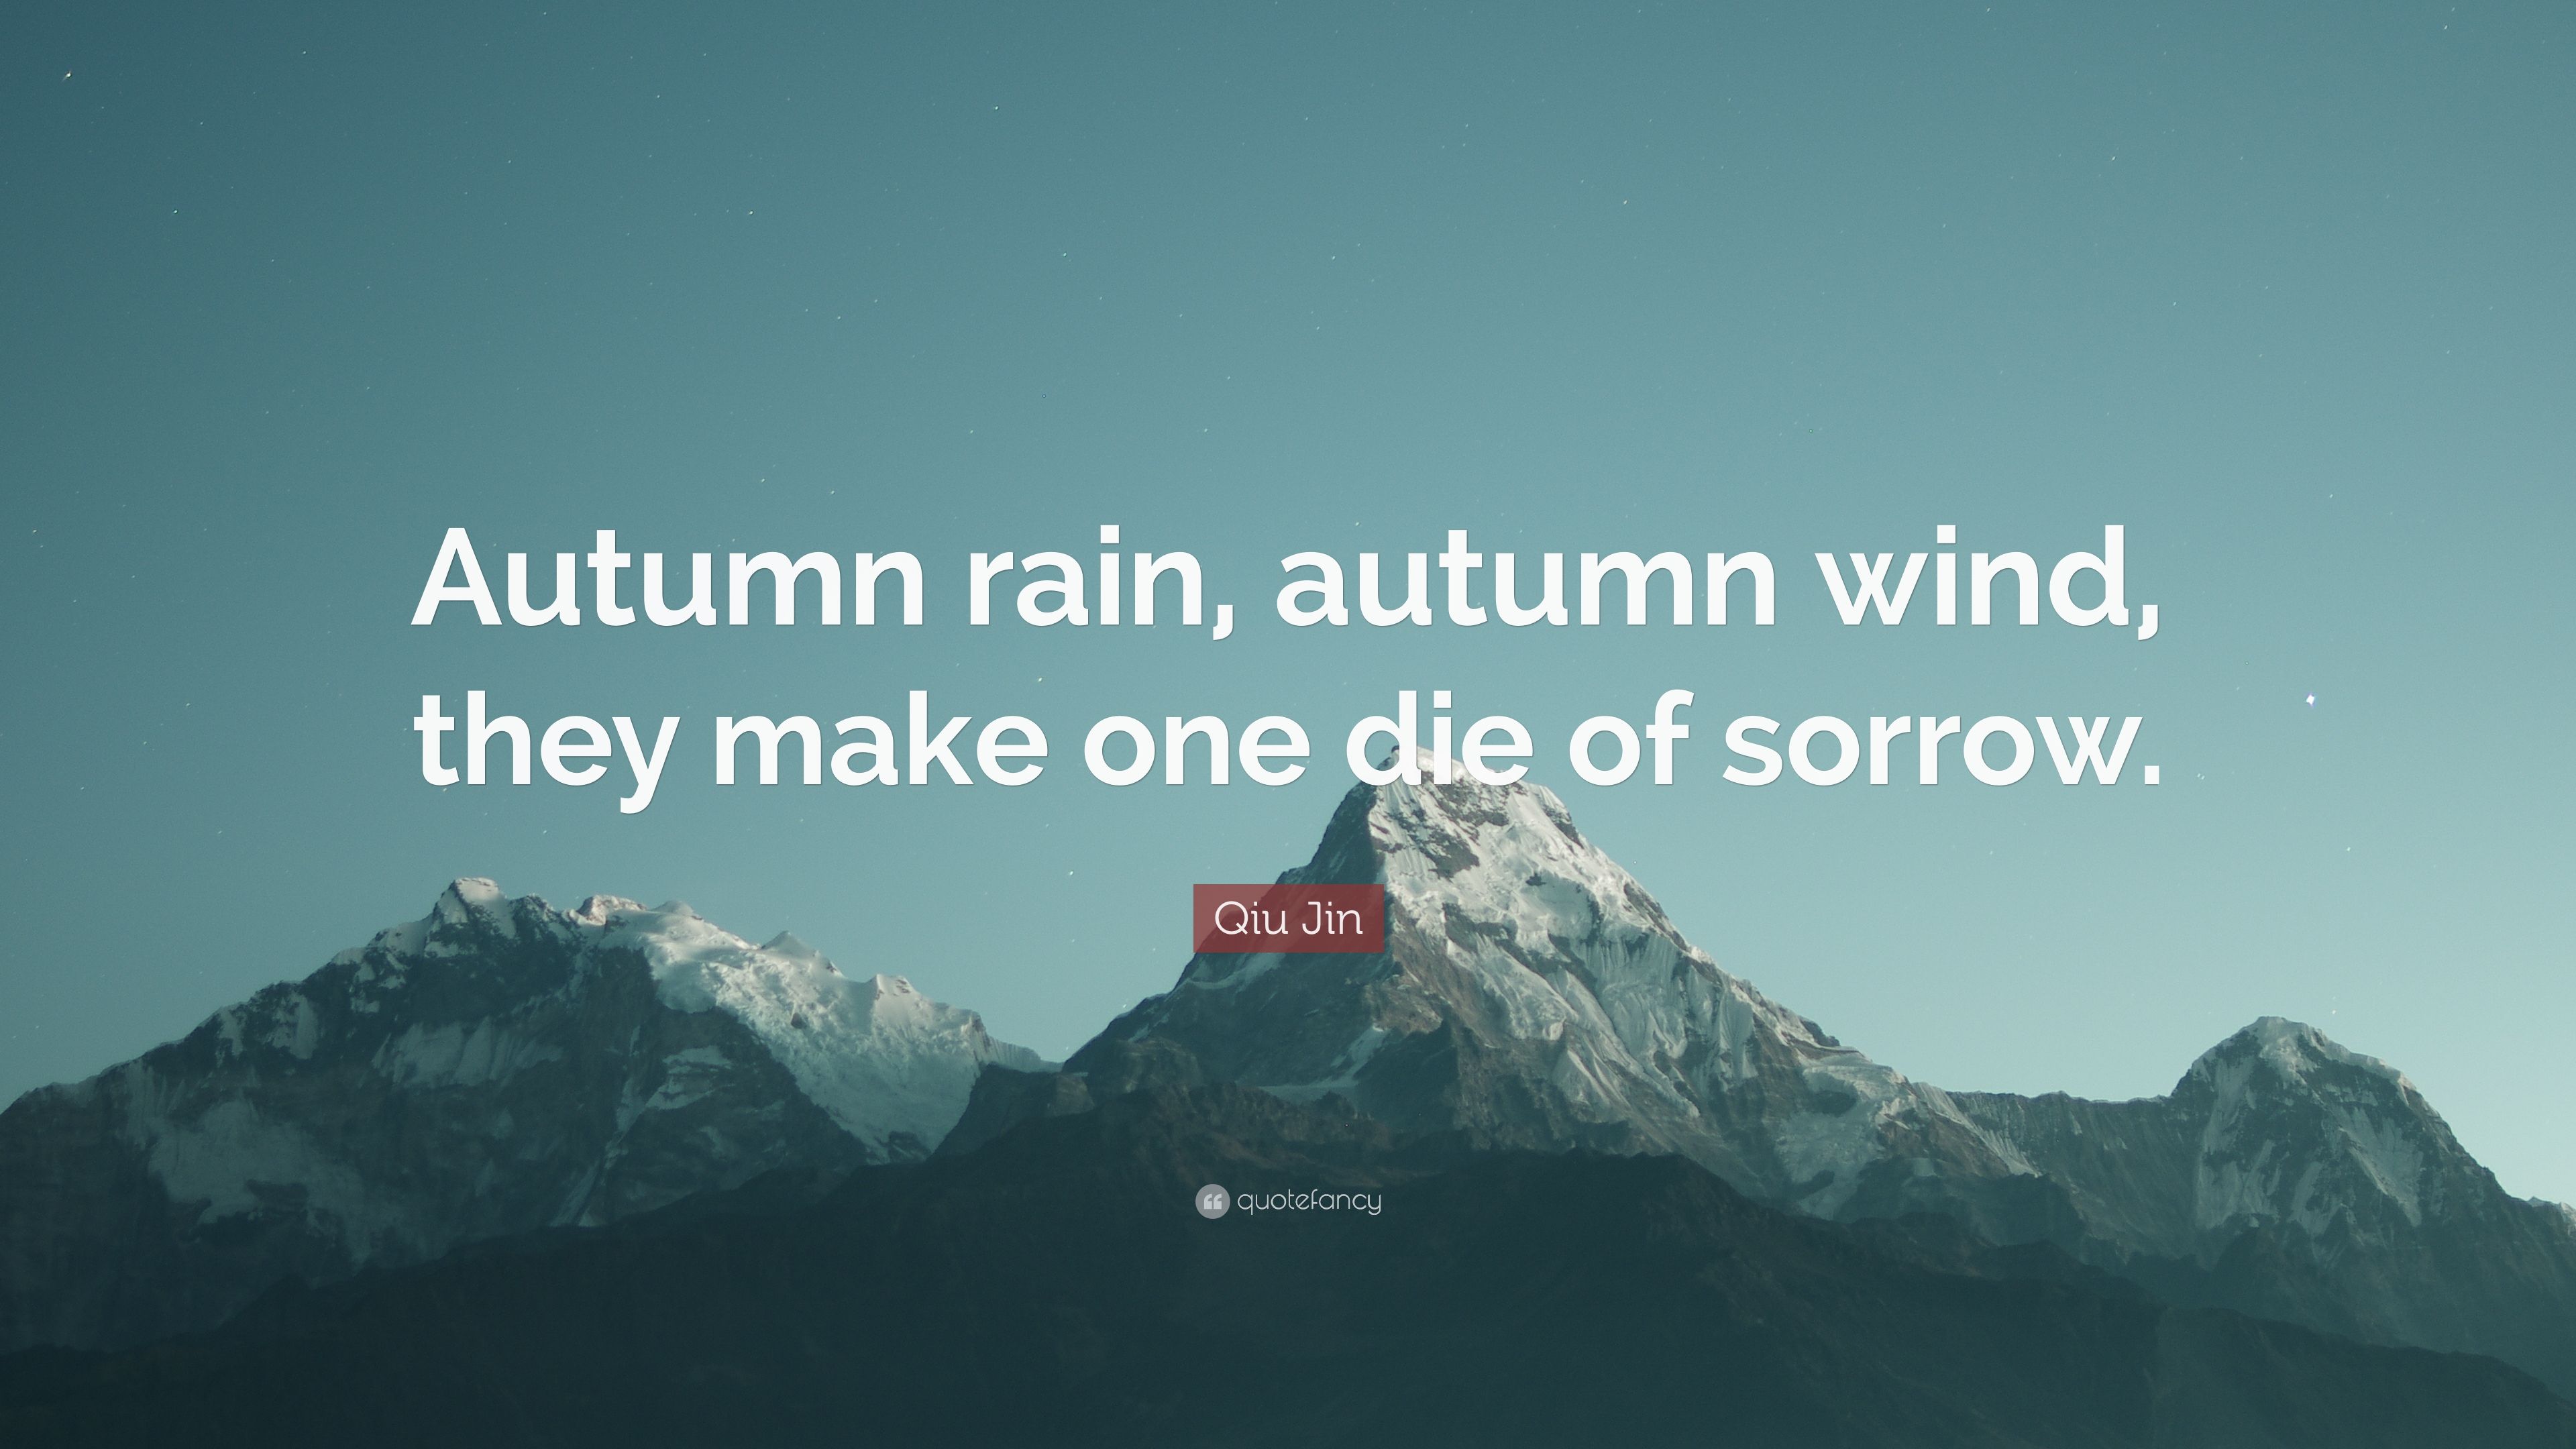 Qiu Jin Quote: “Autumn rain, autumn wind, they make one die of sorrow.” (7 wallpaper)